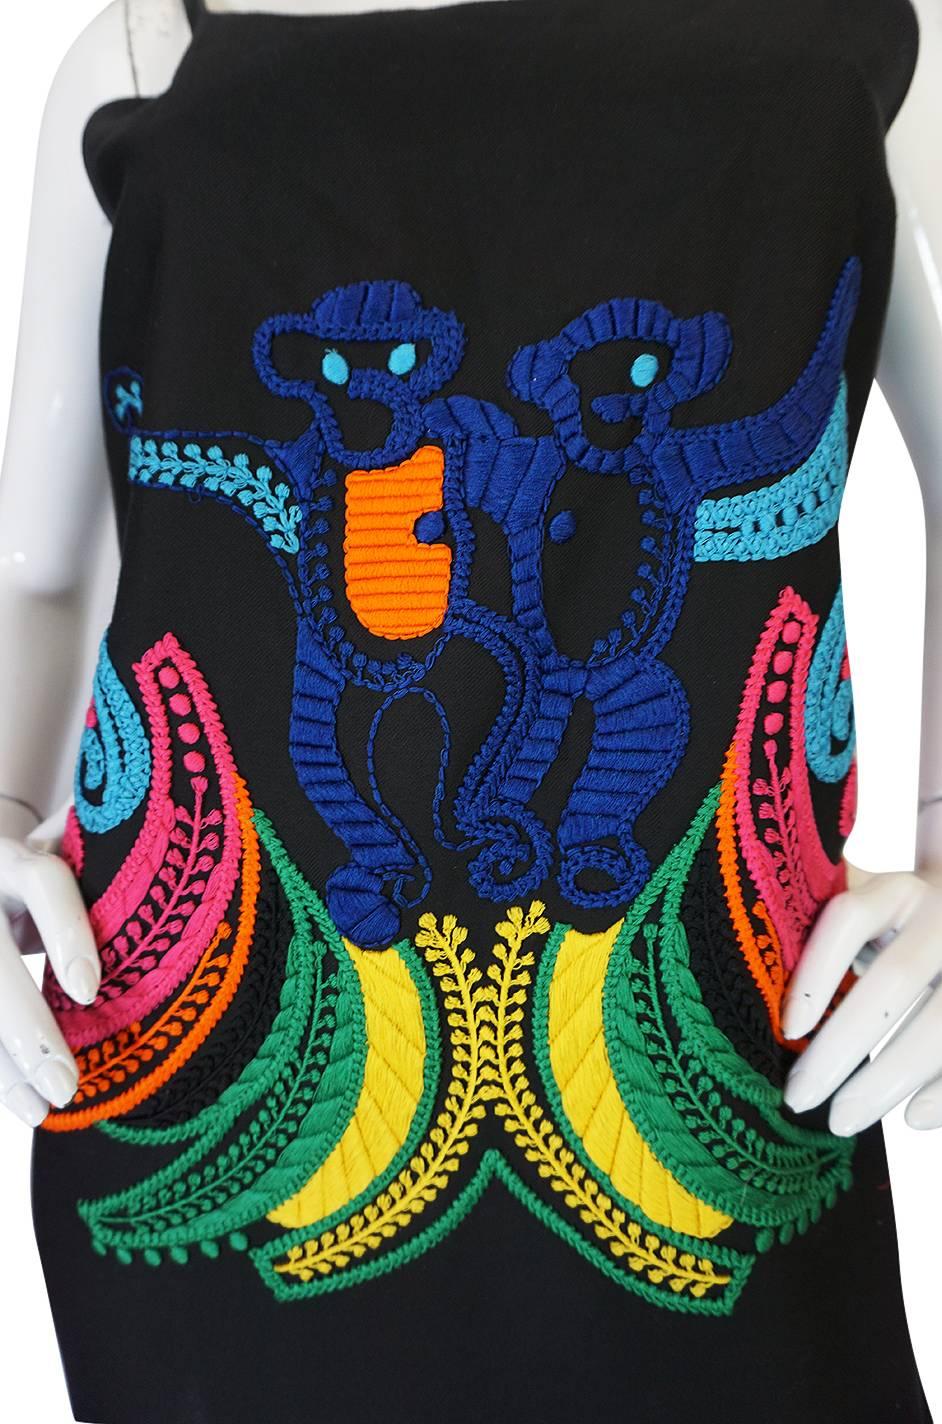 Women's Look 29 S/S 2011 Prada Runway Embroidered Monkey Dress